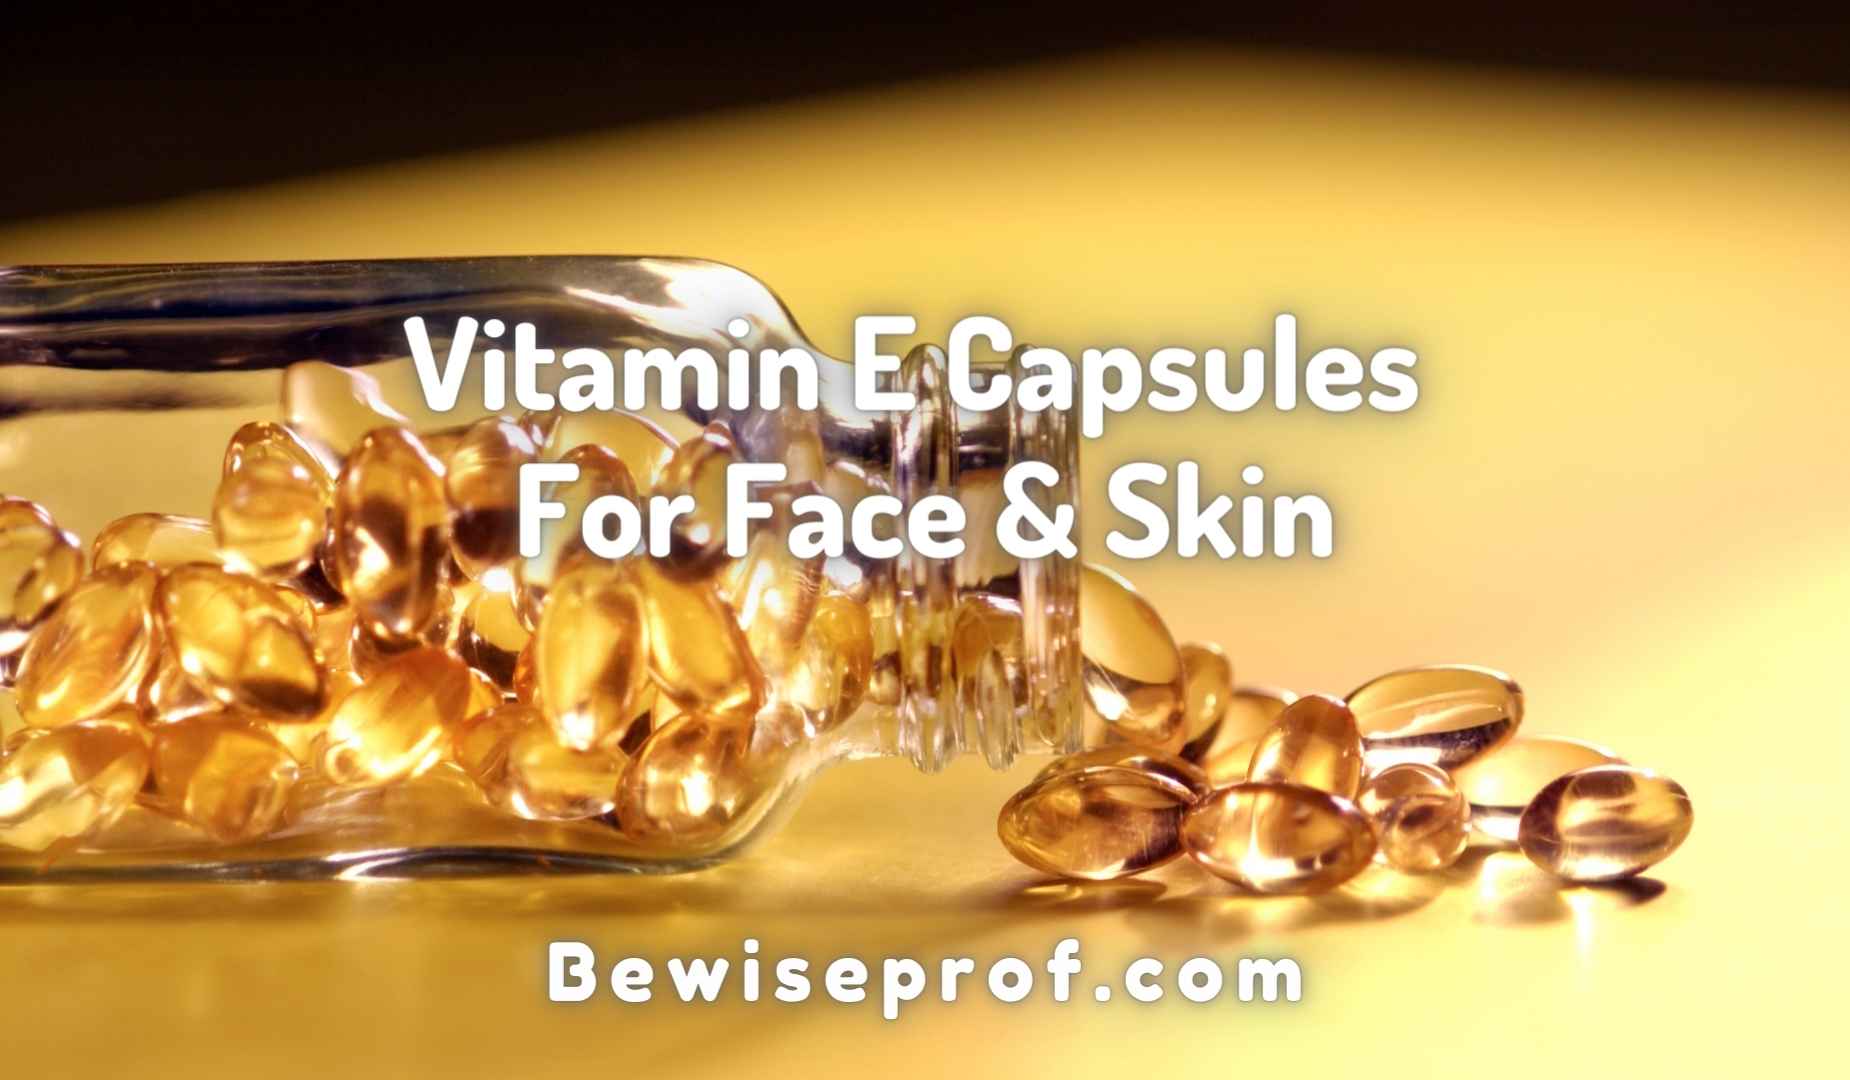 Vitamin E Capsules for Face & Skin